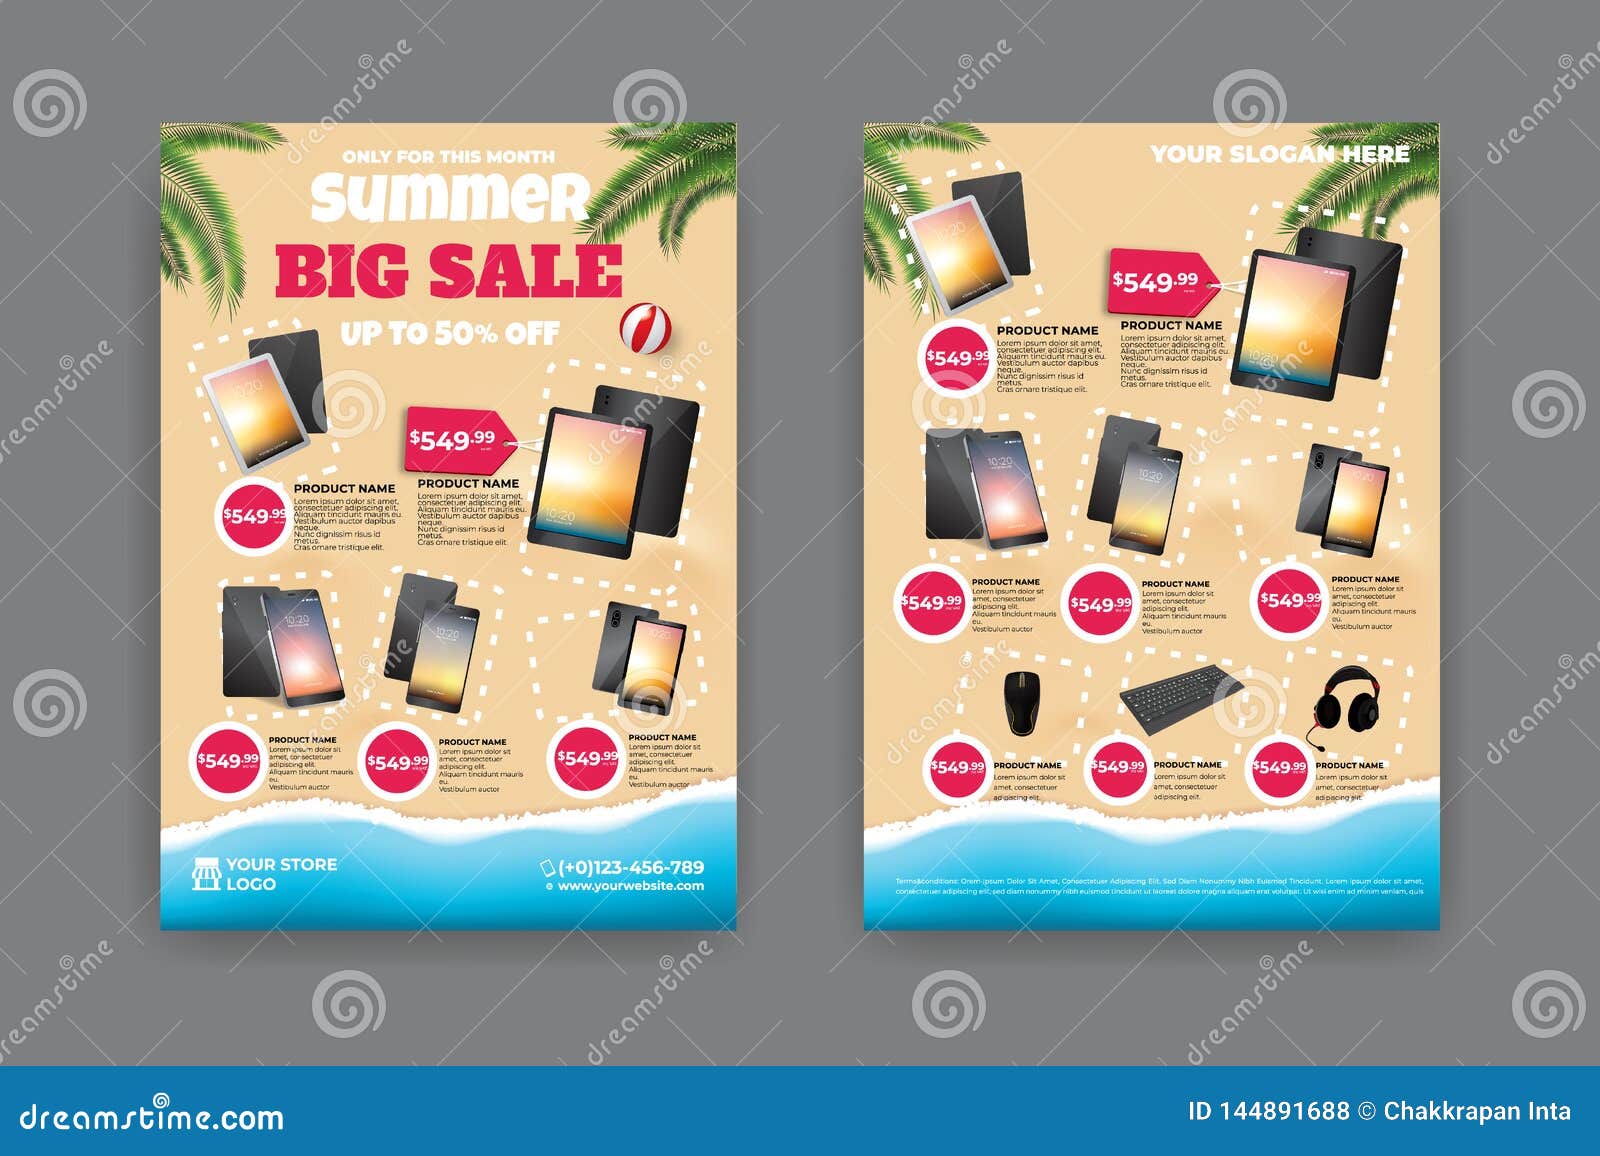 20 Sides Flyer Template for Summer Sale Promotion Stock Vector For Product Promotion Flyer Template